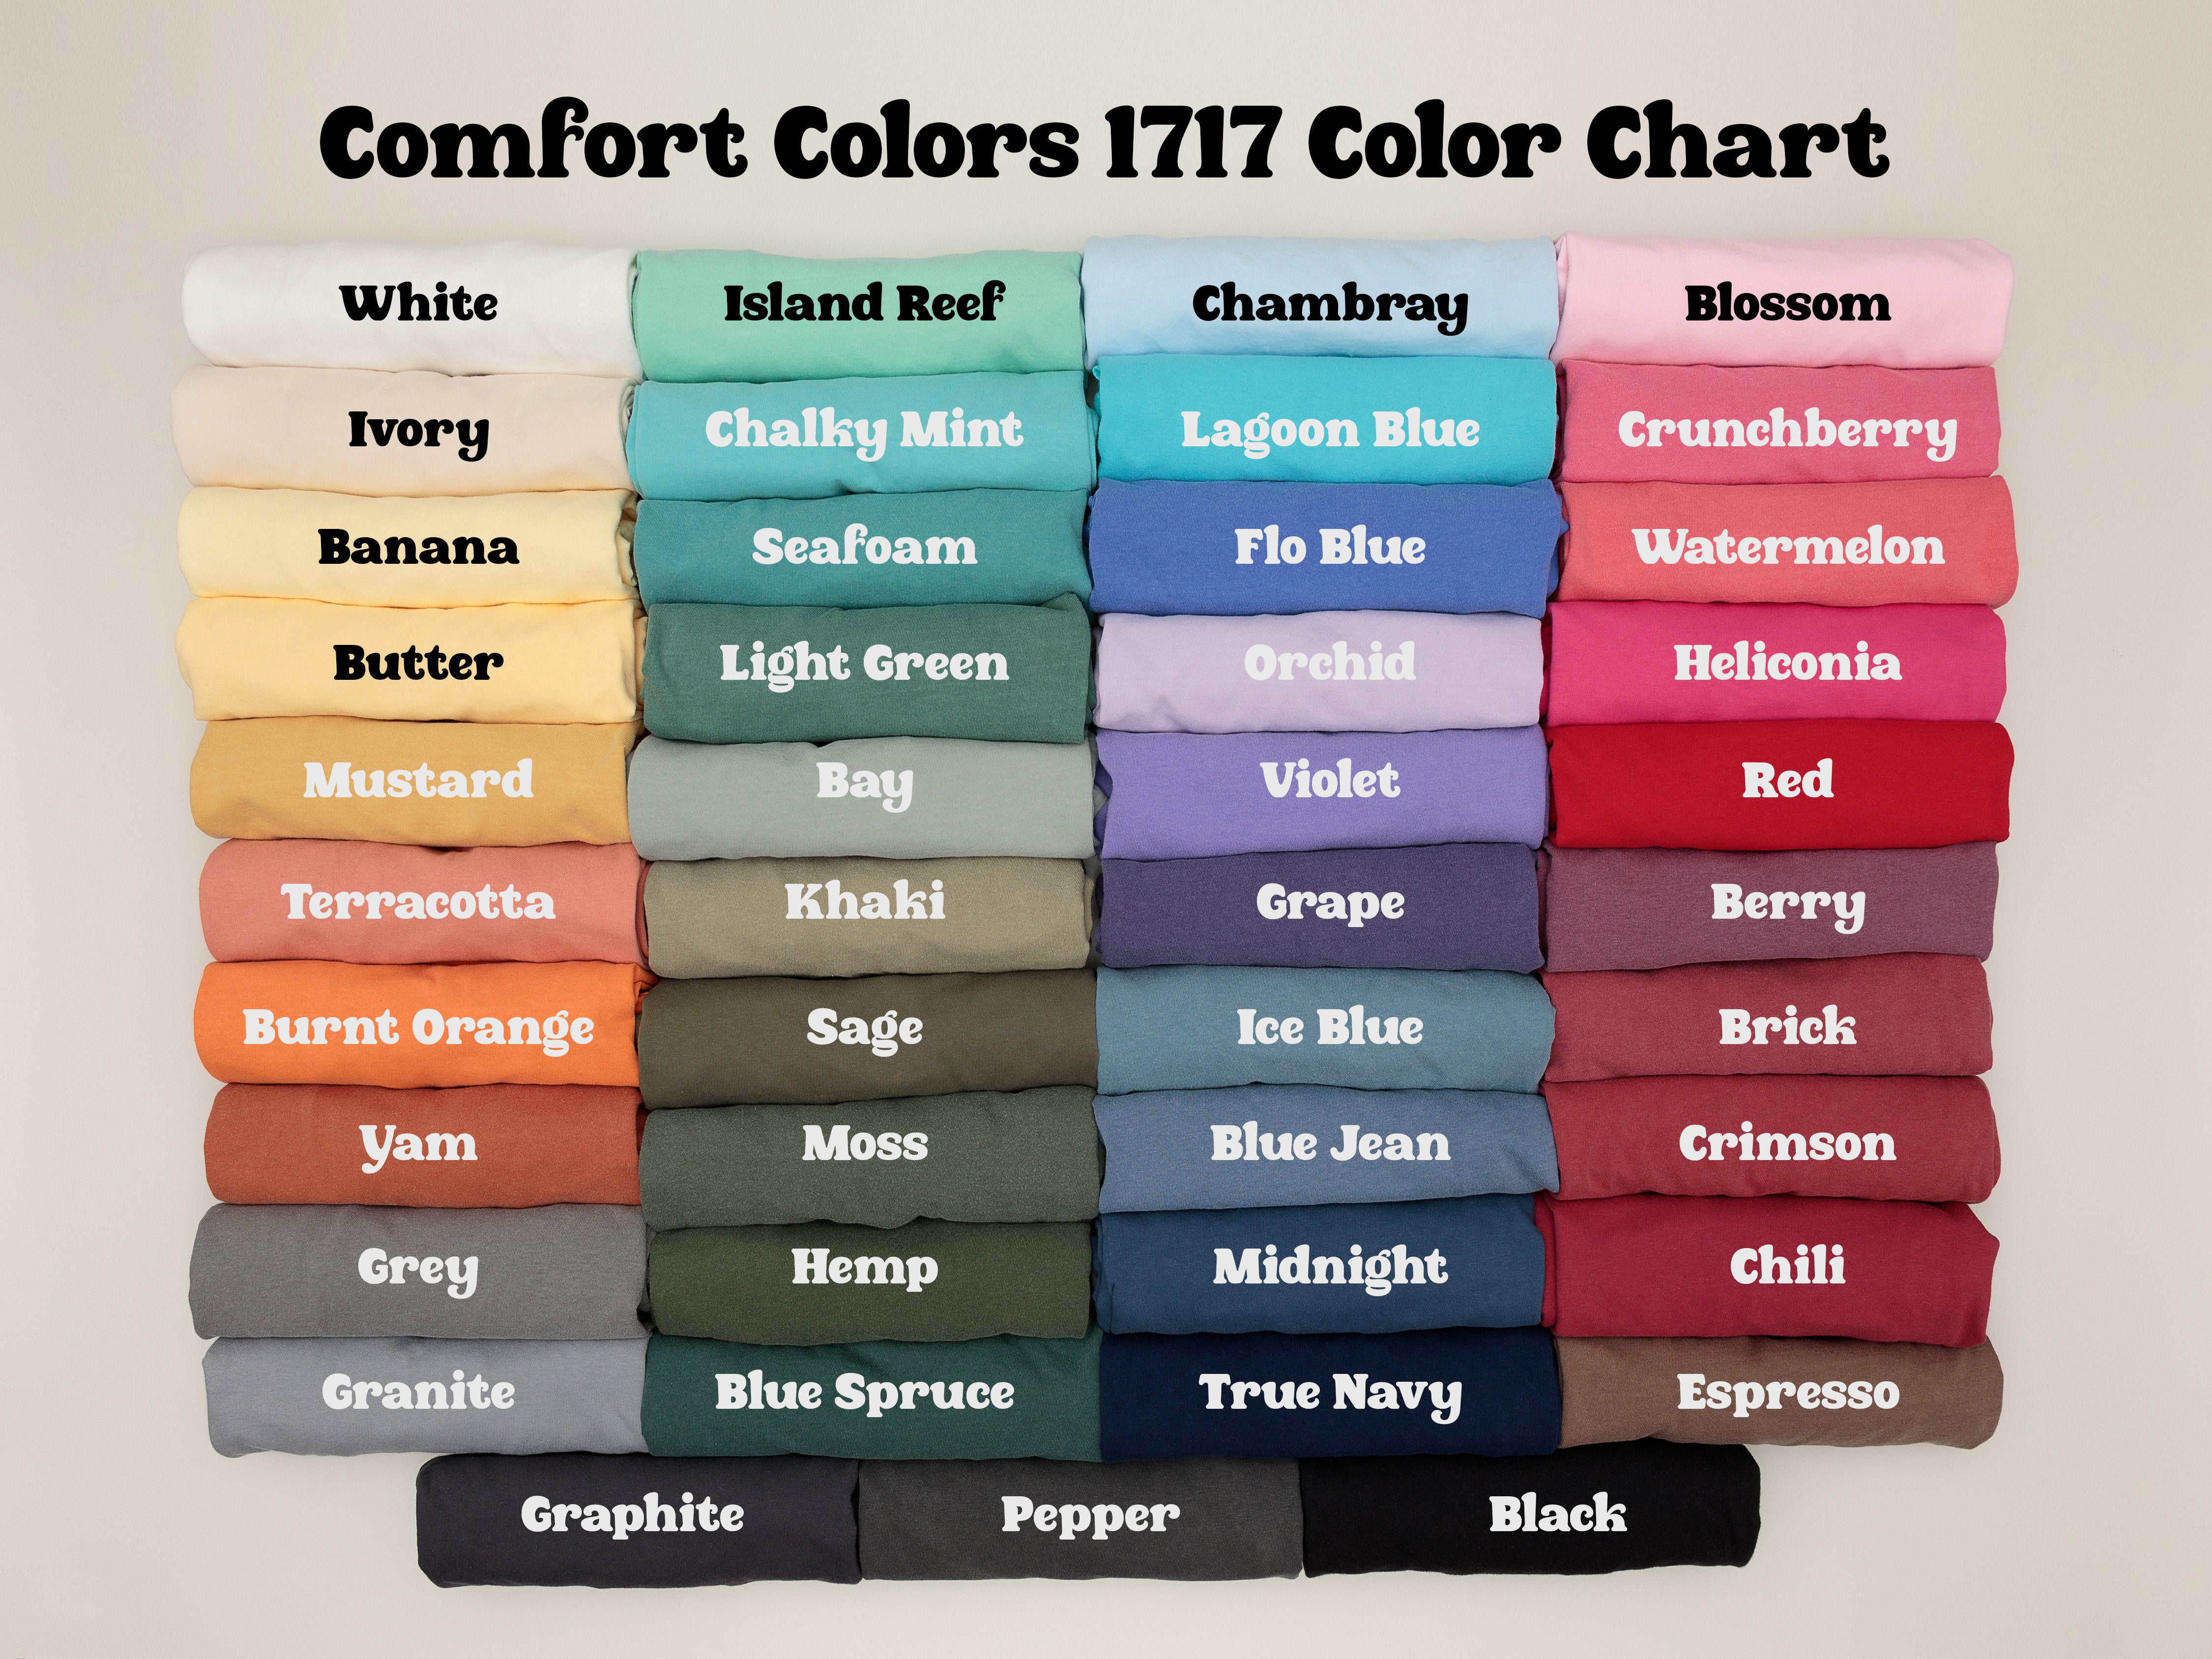 Retro Girls Trip Adventure Shirt- Comfort Colors